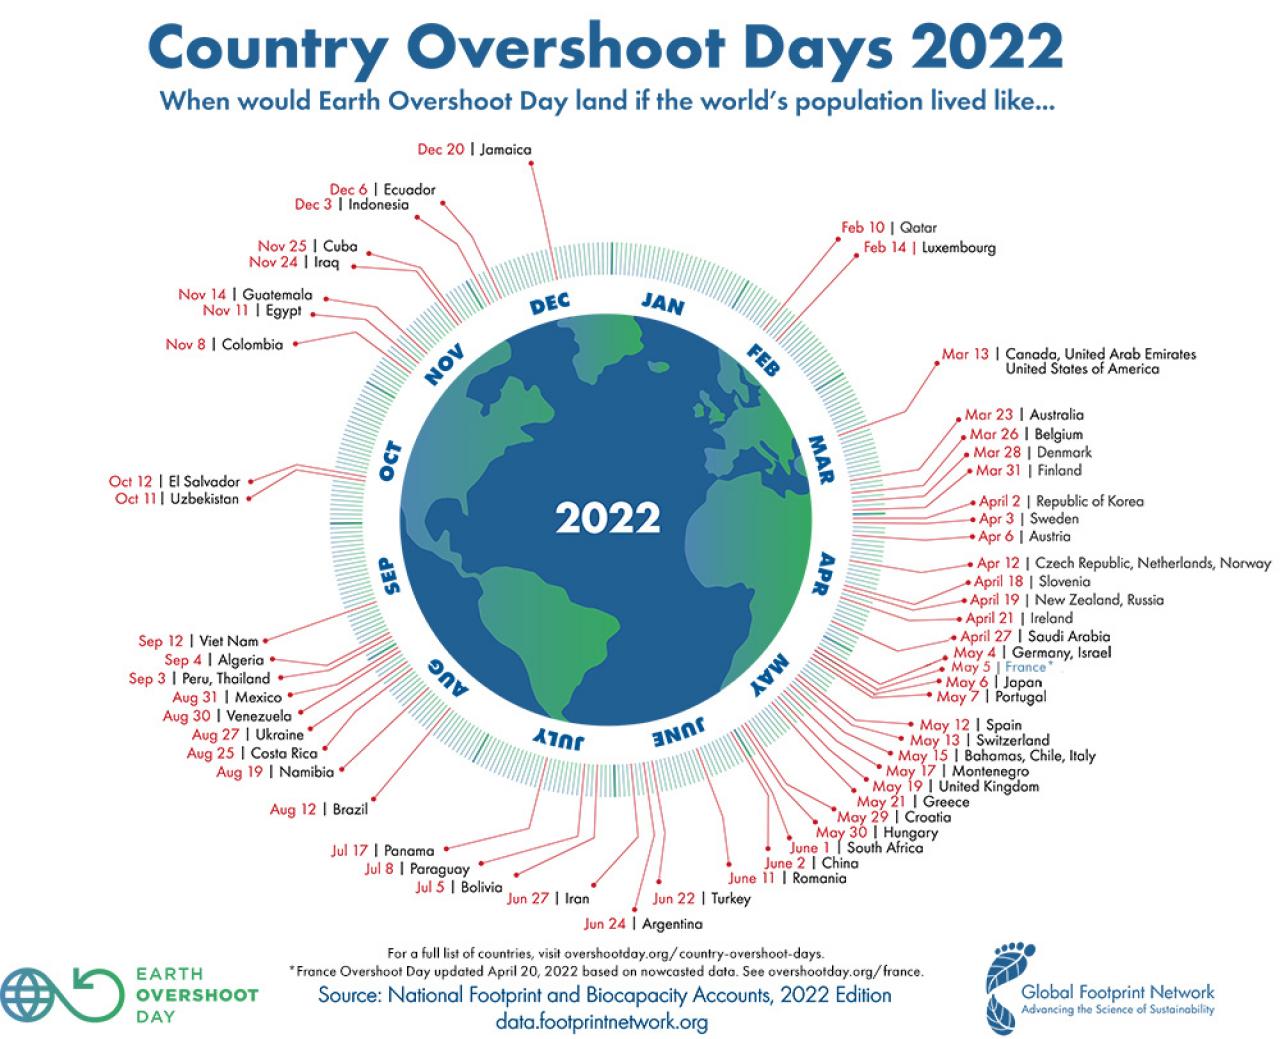 Overshoot day per i vari paesi